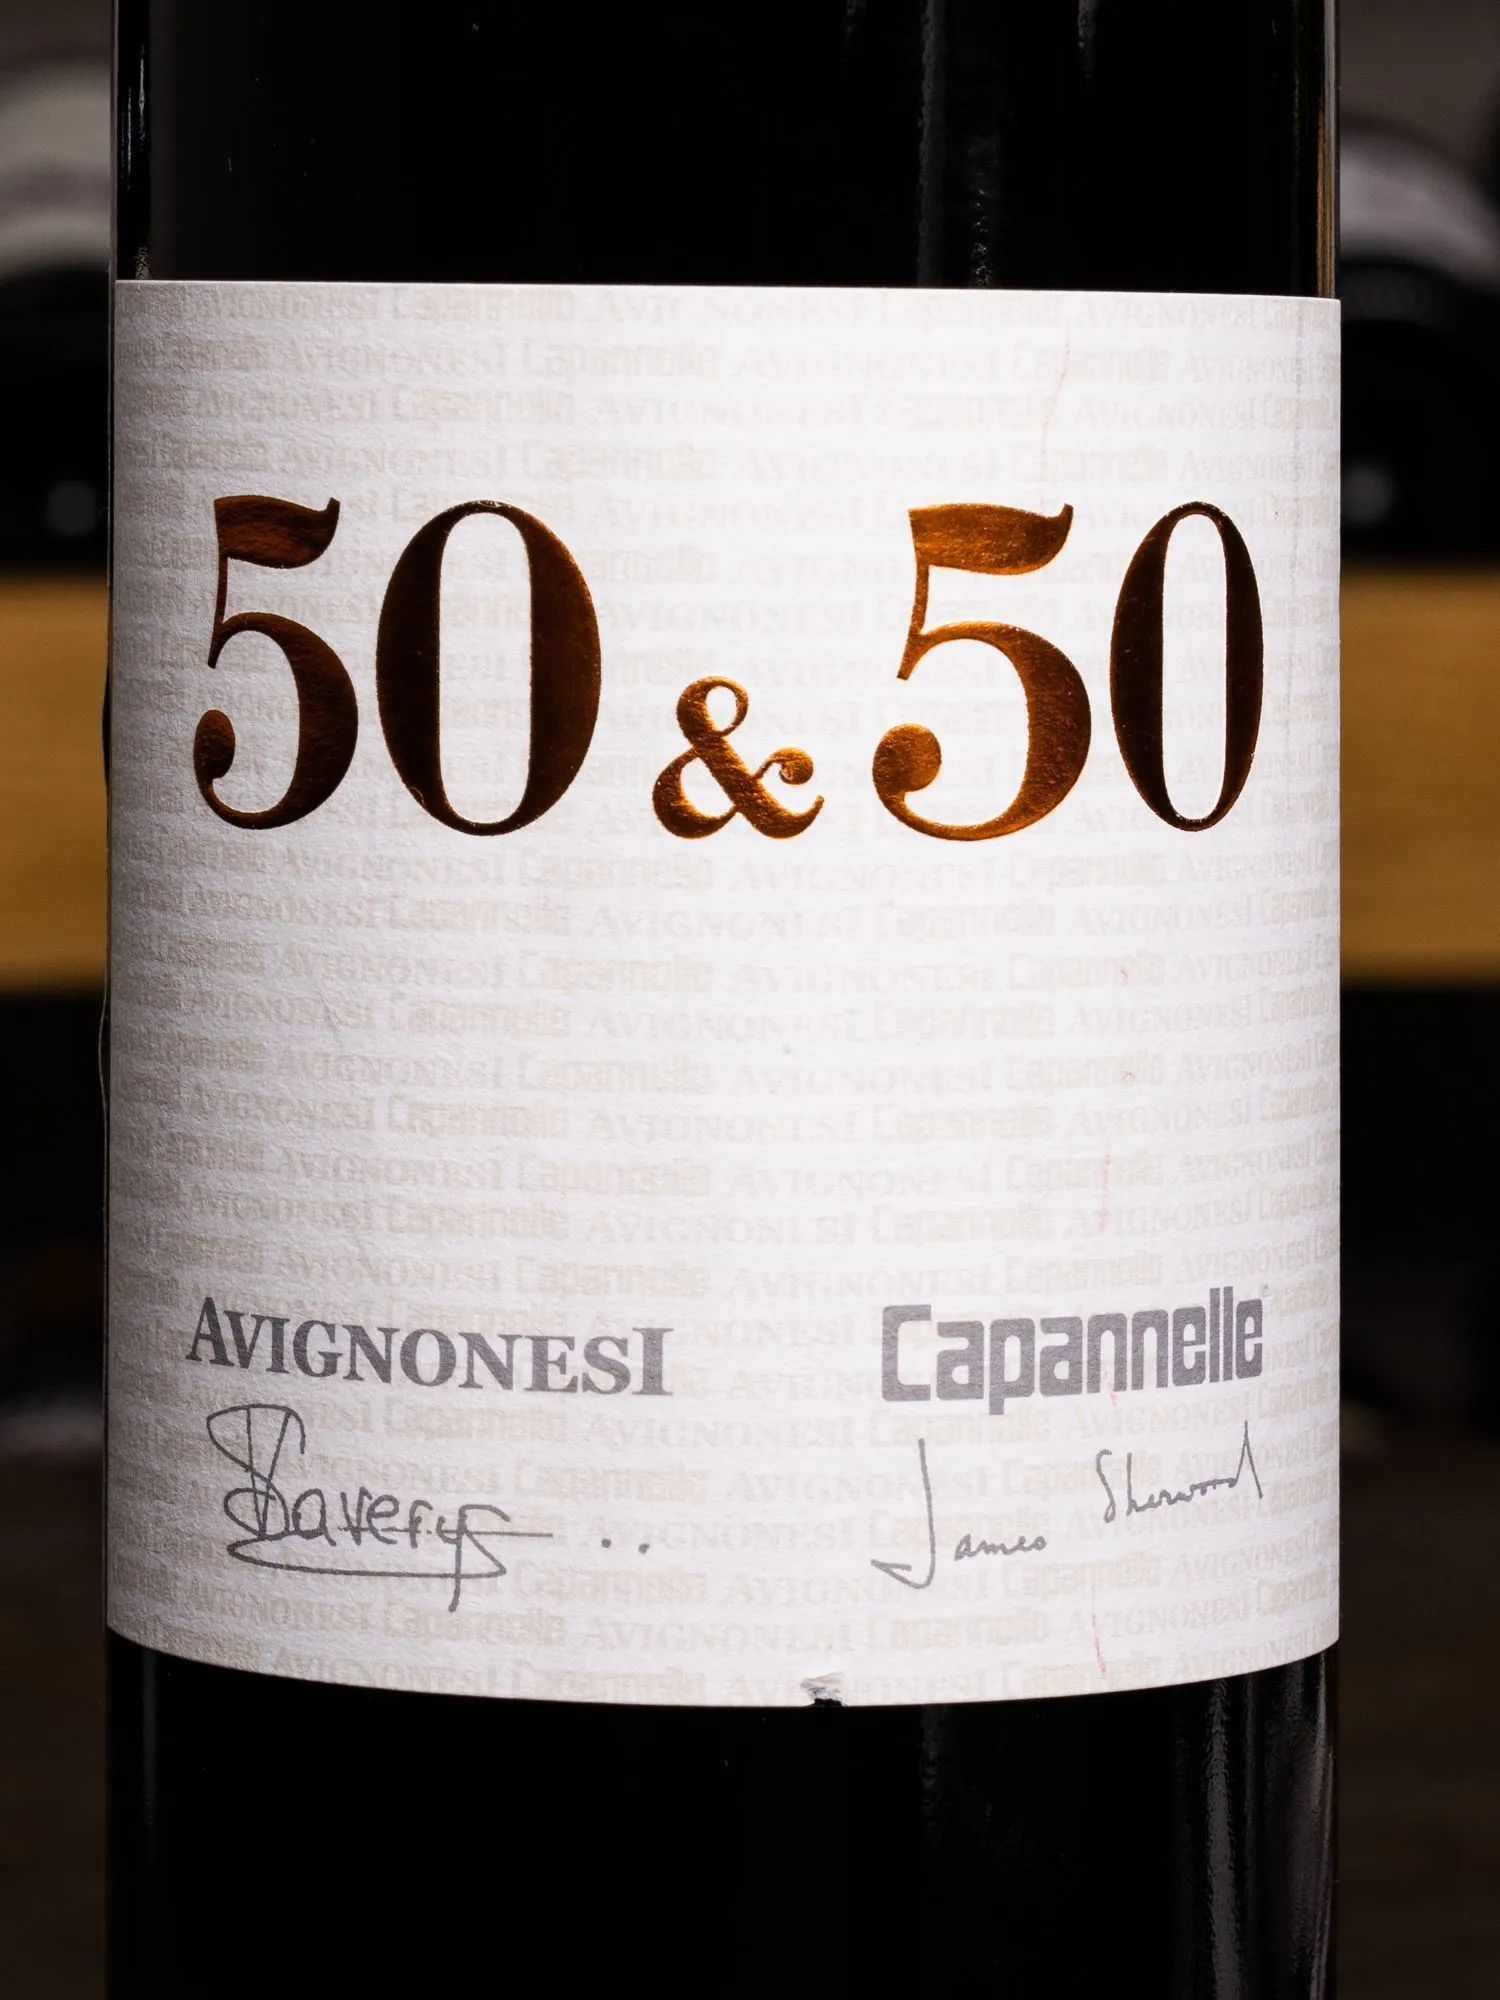 Вино Avignonesi-Capannelle 50 & 50 Toscana 2012 / Авиньонези-Капаннелле 50&50 Тоскана 2012